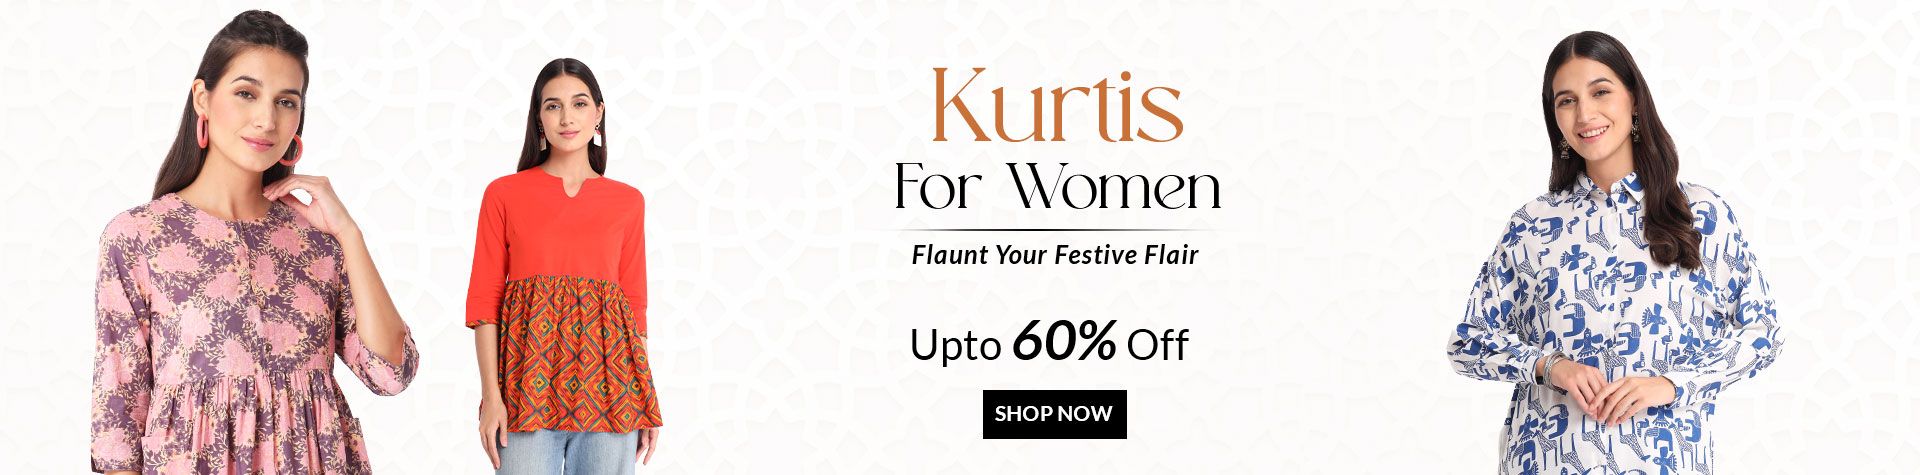 kurti for women online